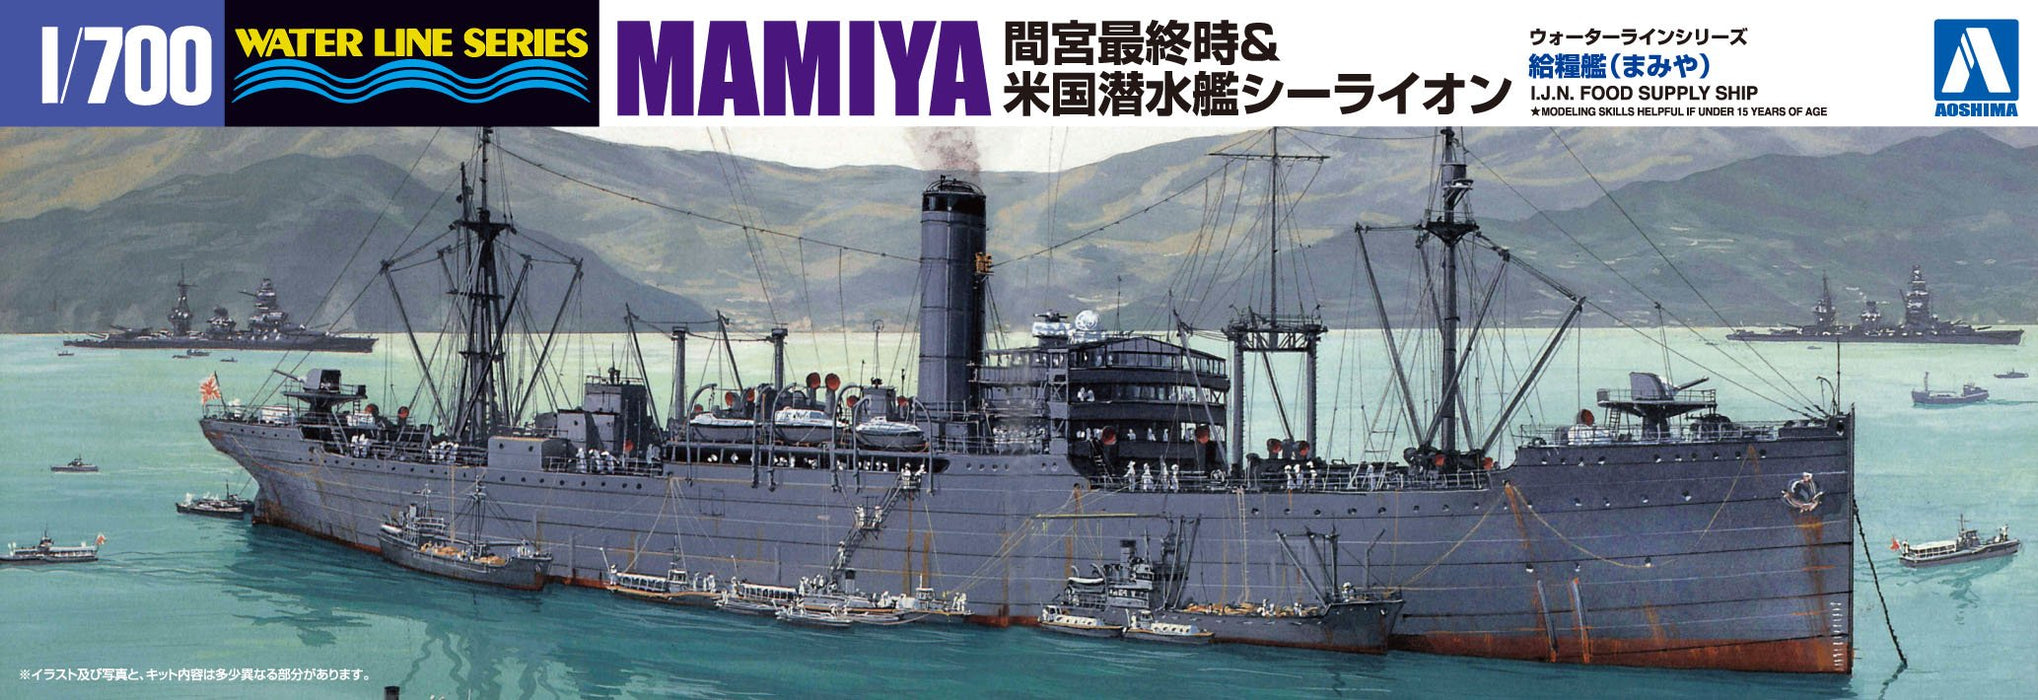 AOSHIMA Waterline 10389 Ijn Food Supply Ship Mamiya & Uss Sealion 1/700 Scale Kit